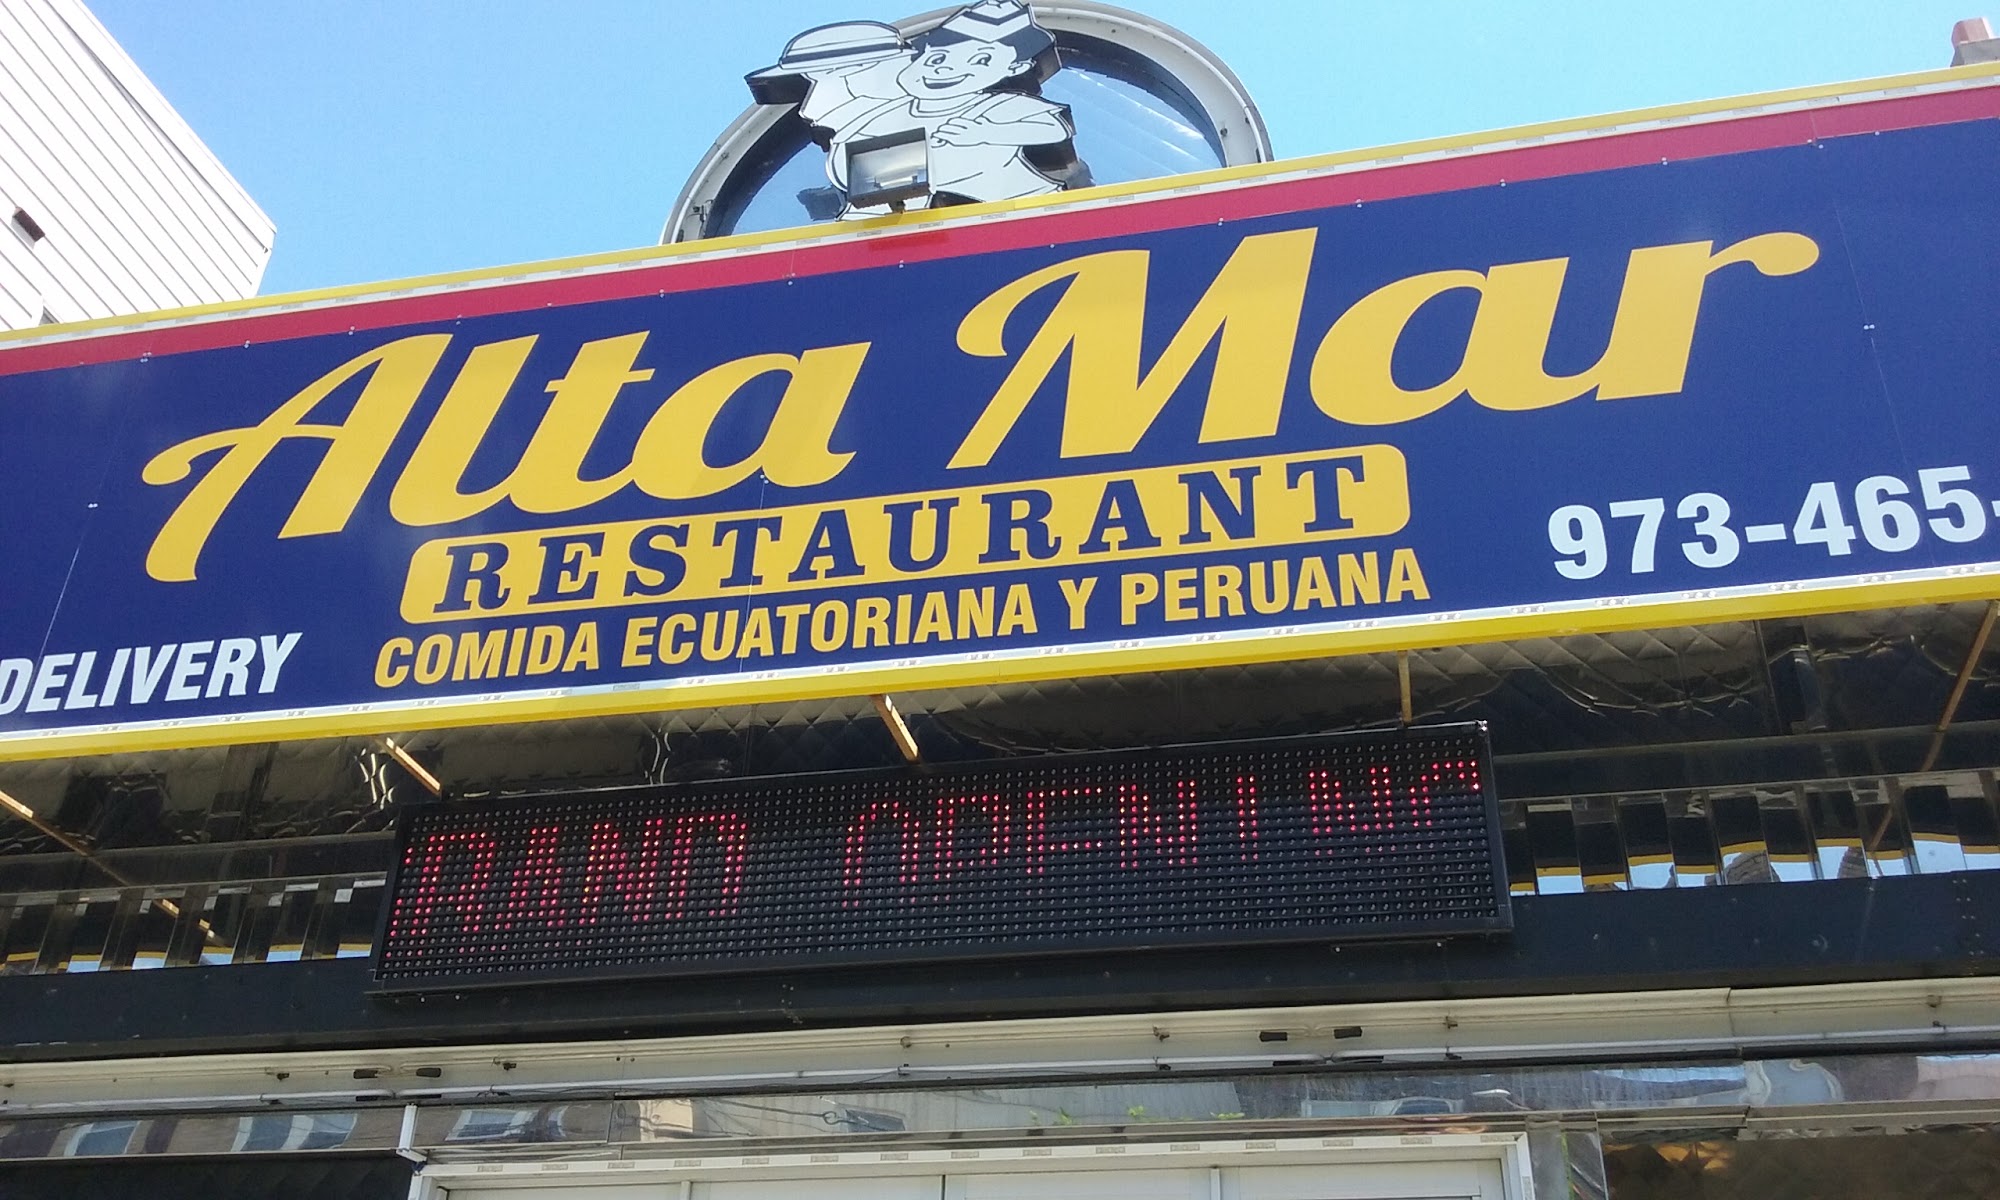 Gerald's Alta Mar Restaurant